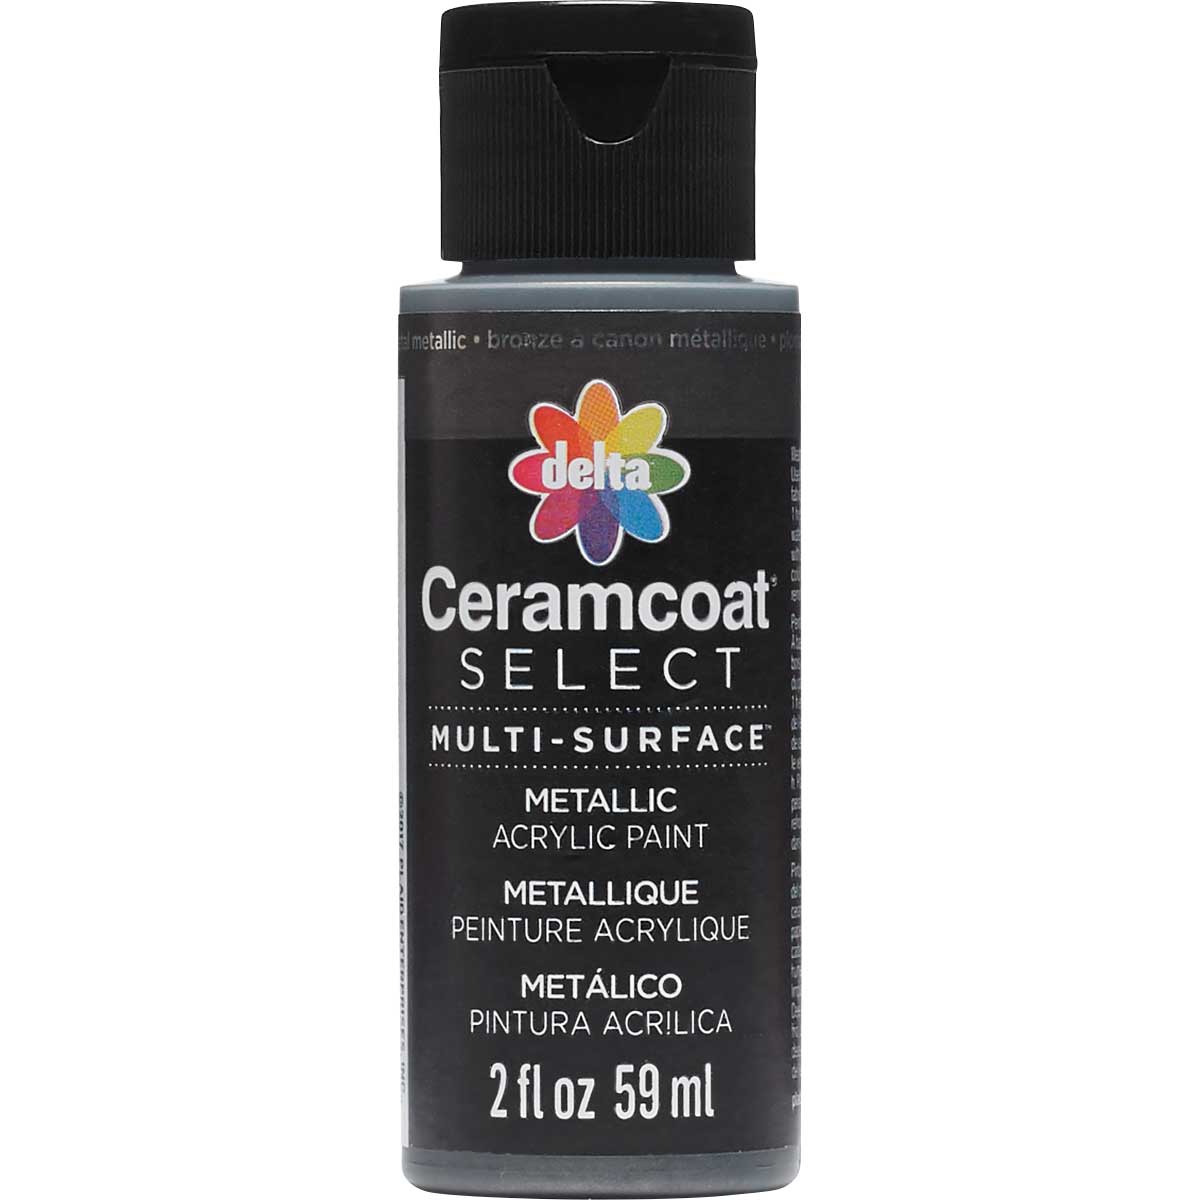 Delta Ceramcoat ® Select Multi-Surface Acrylic Paint - Metallic - Gunmetal, 2 oz. - 04113